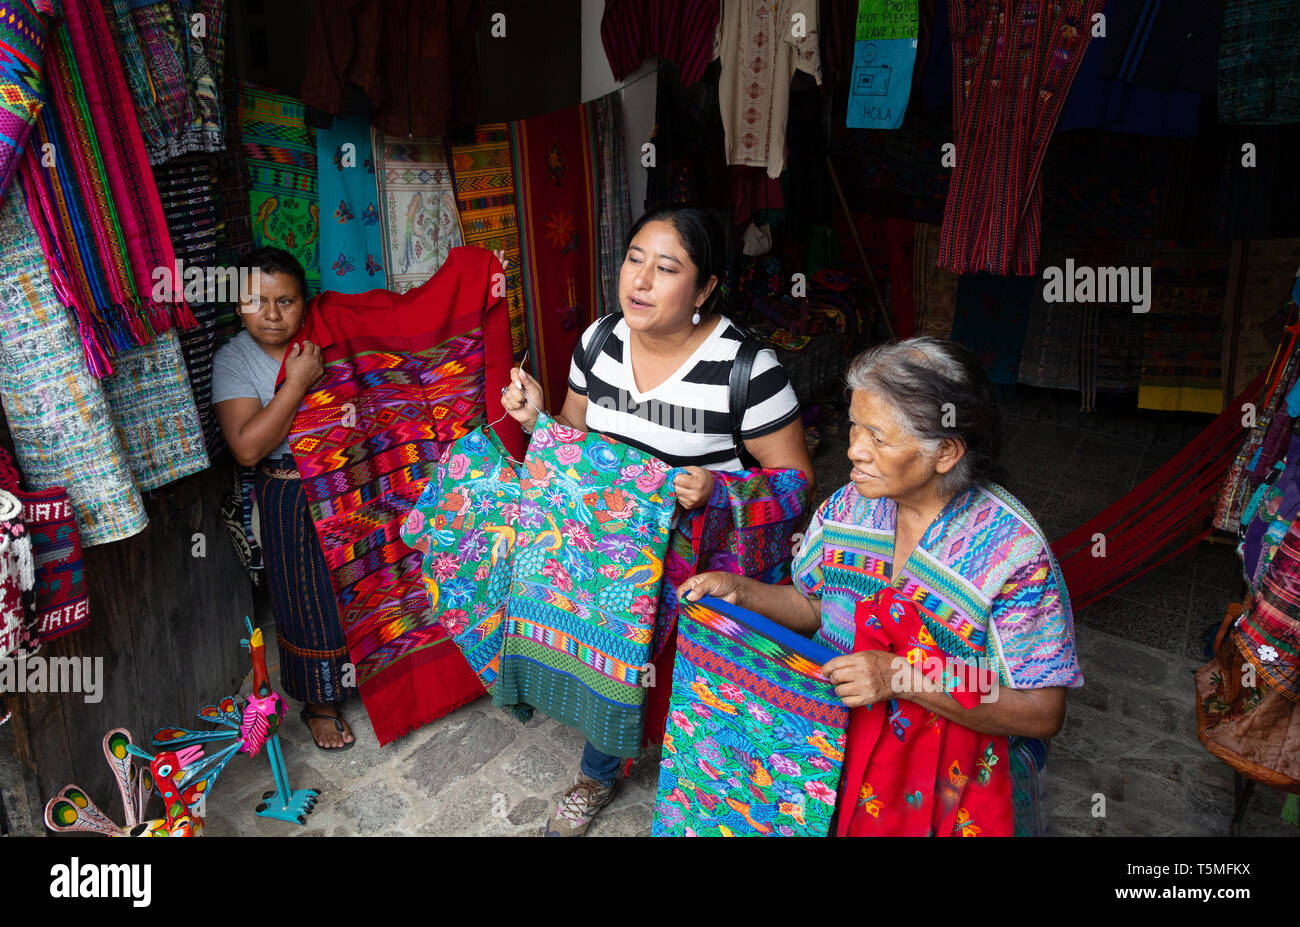 Antigua Guatemala, local guatemalan women show the traditional weaving of colorful textiles, Antigua Guatemala Latin America Stock Photo